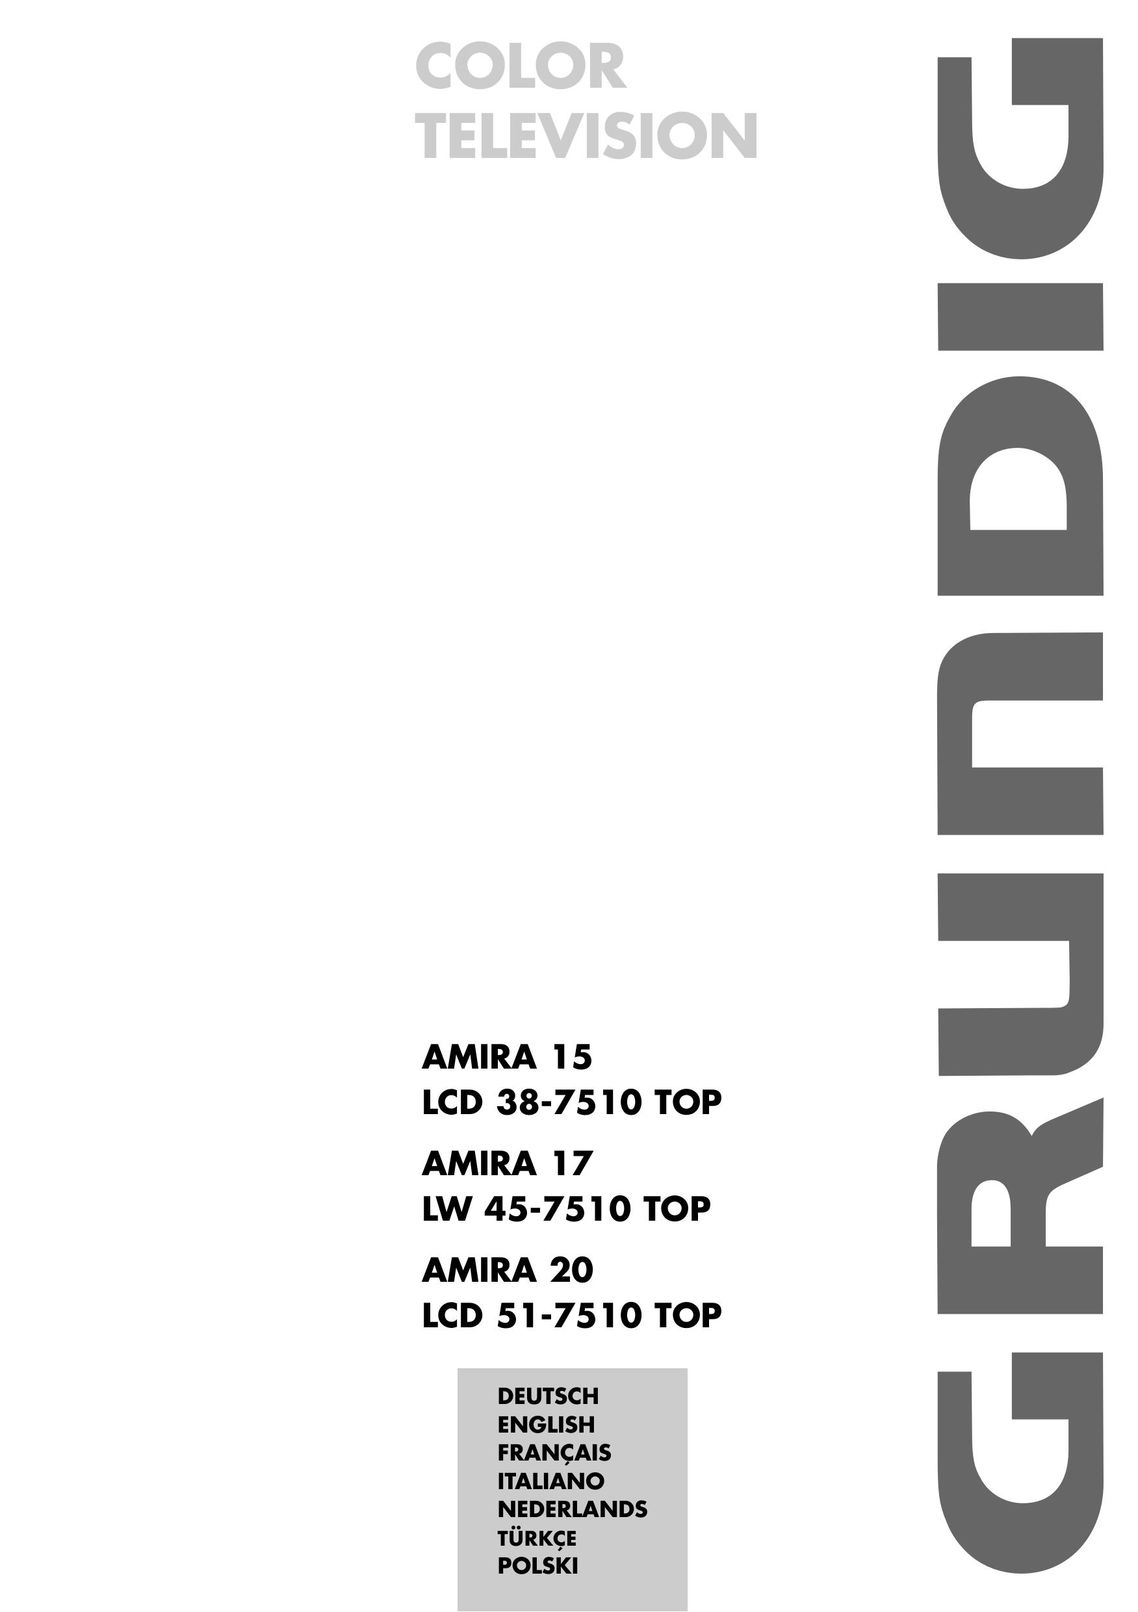 Grundig AMIRA 17 LW 45-7510 TOP CRT Television User Manual